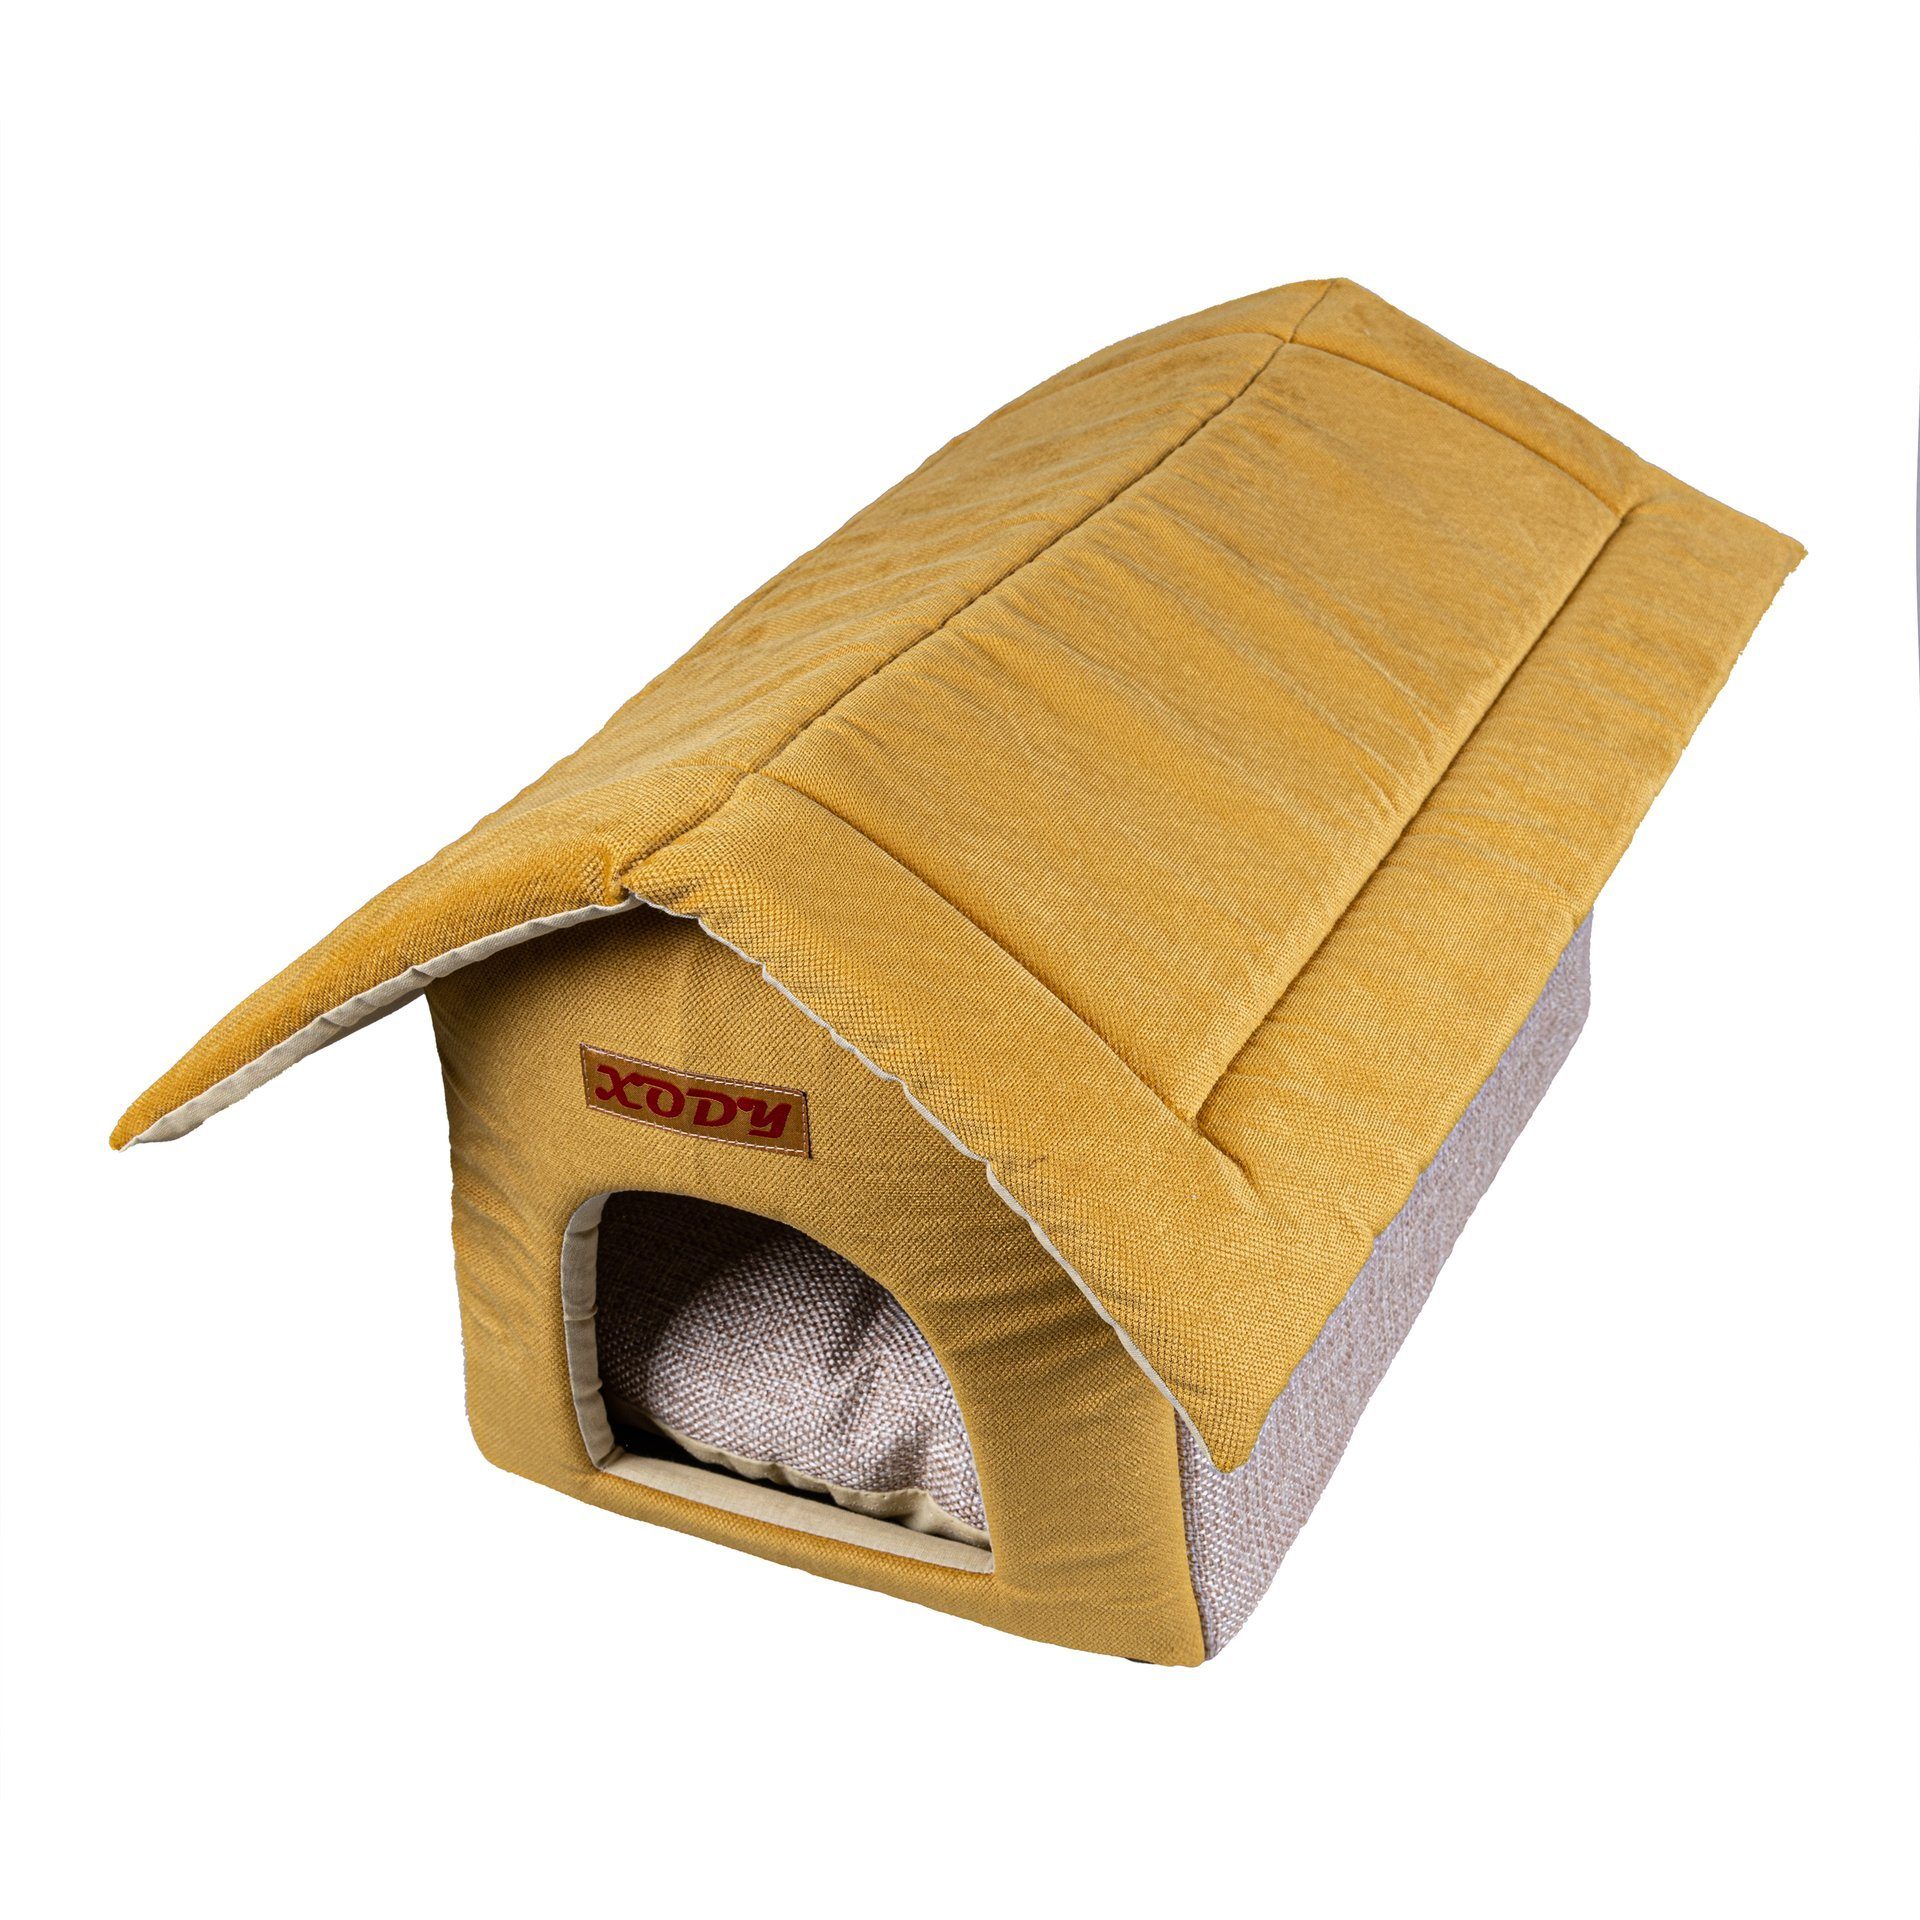 фото Домик для кошек и собак xody будка №2, флок, olive, желтый, 50x32x30см